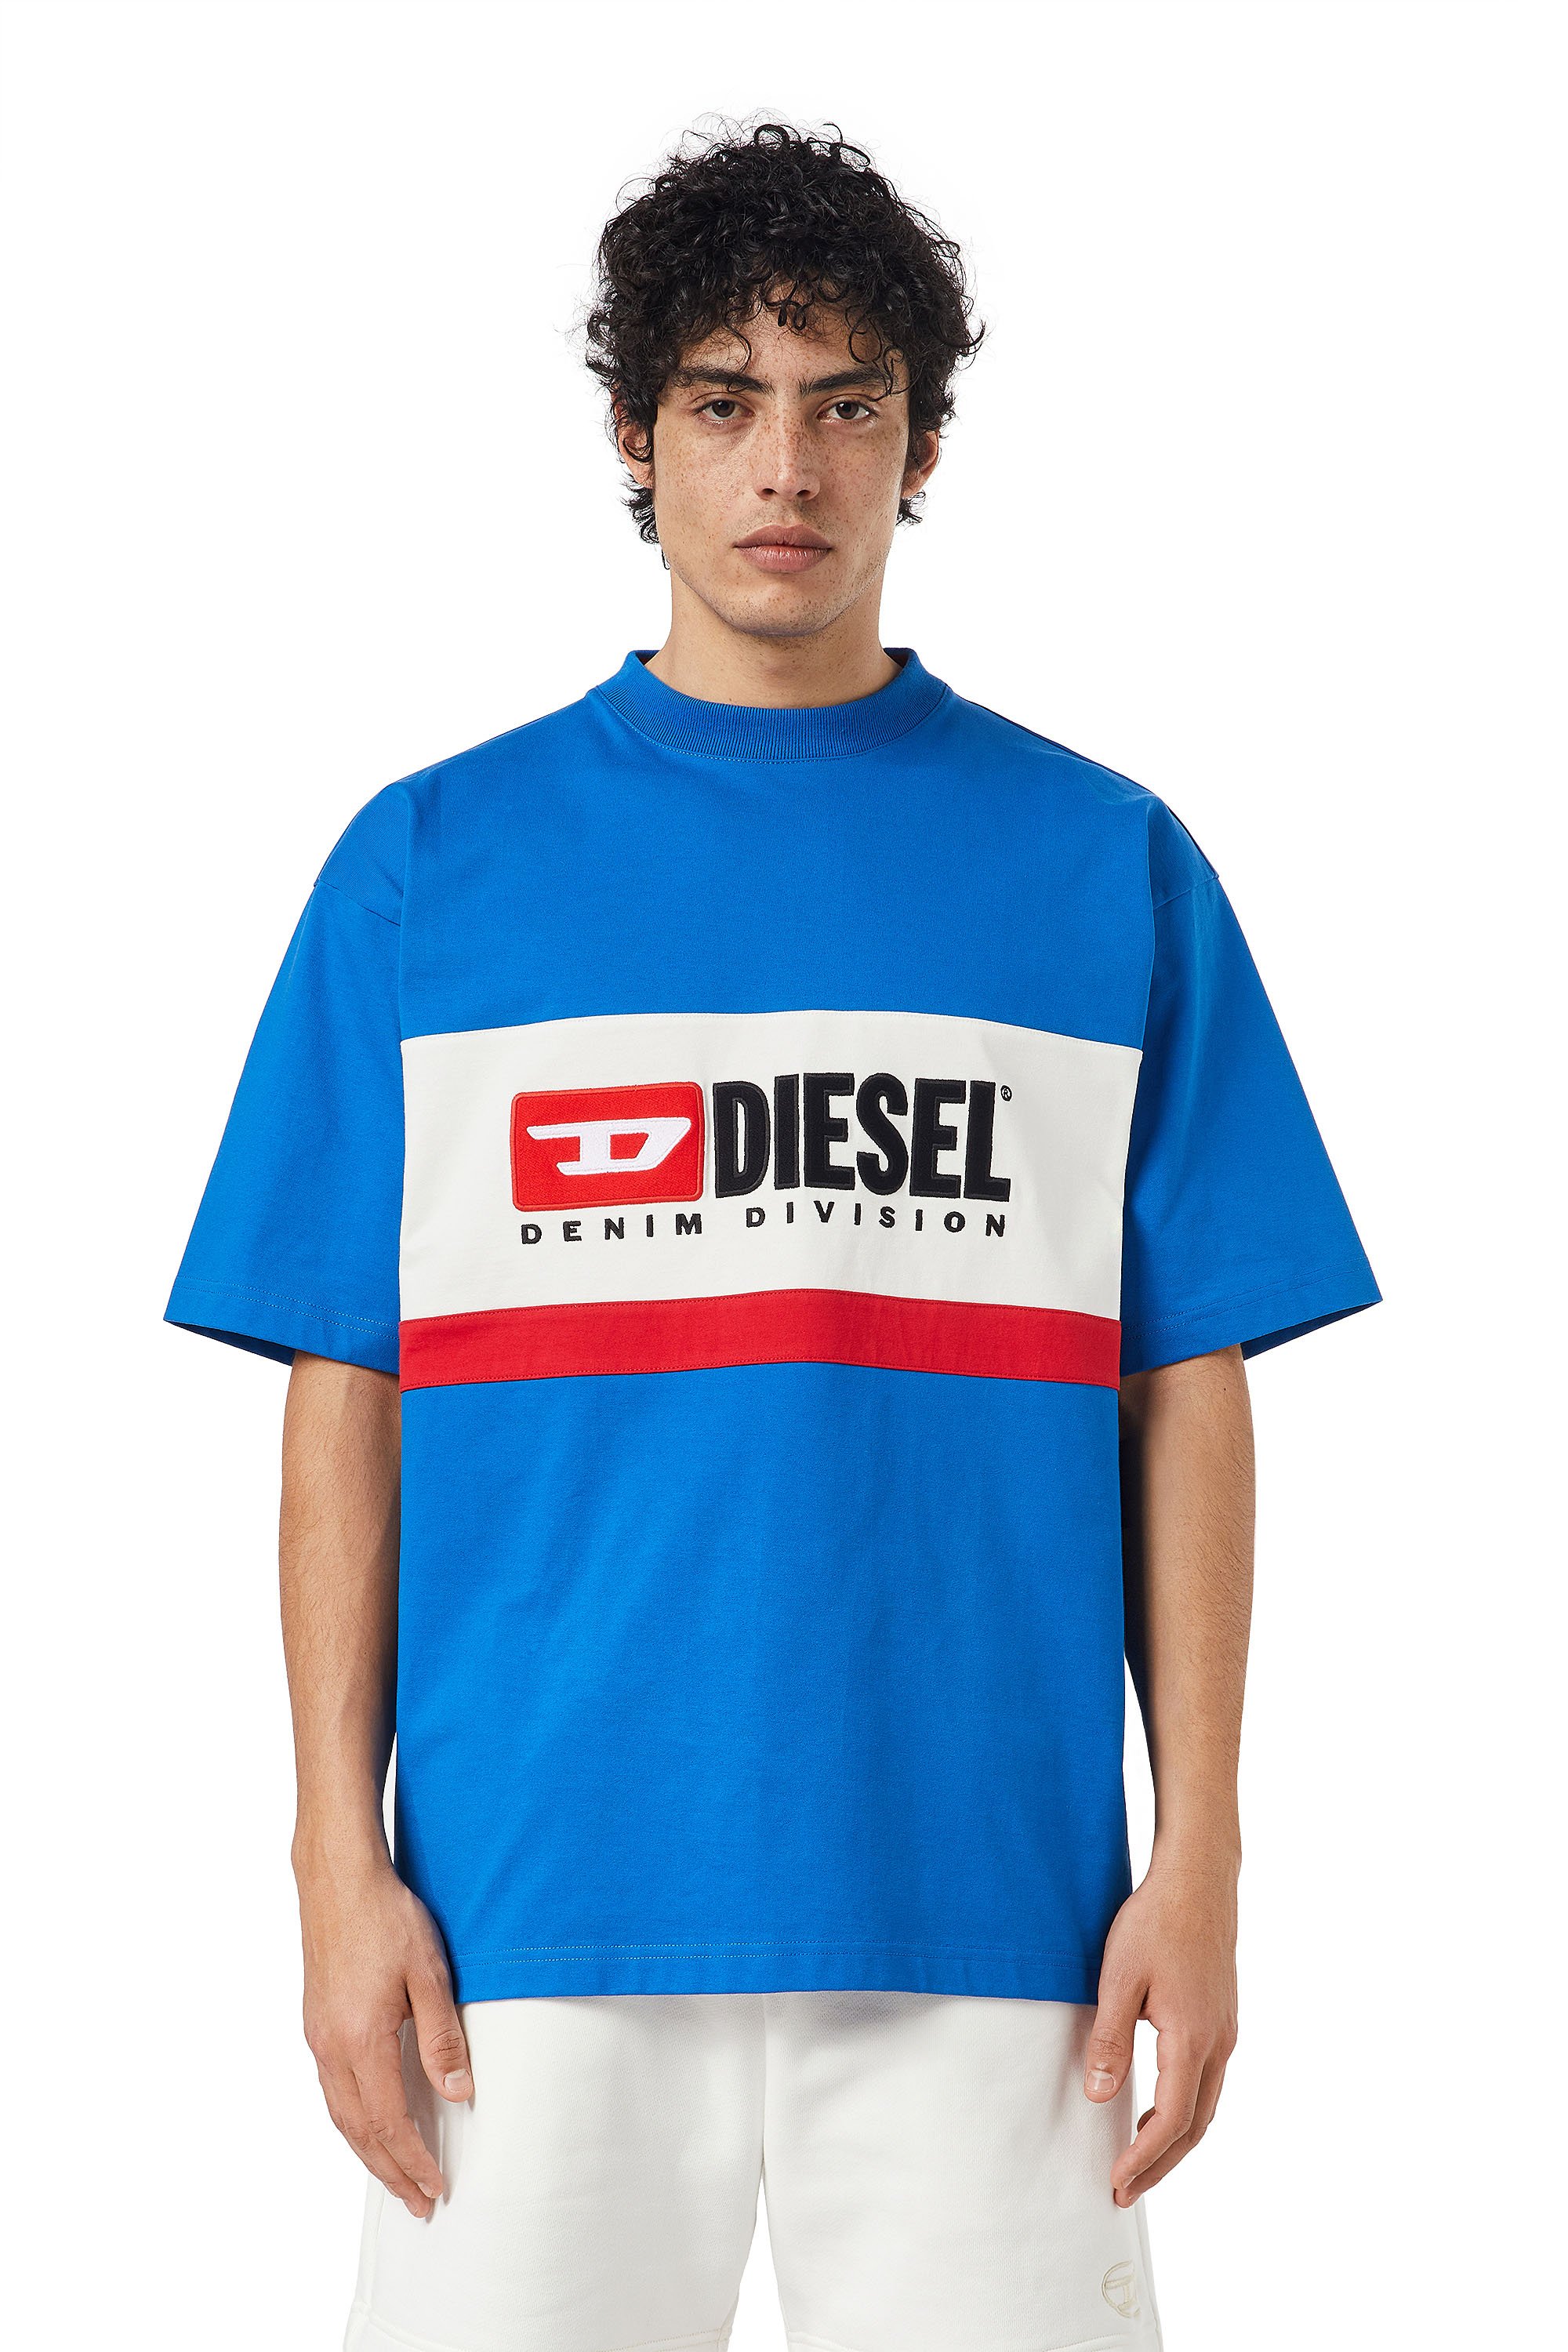 Diesel - T-STREAP-DIVISION, Blue - Image 2